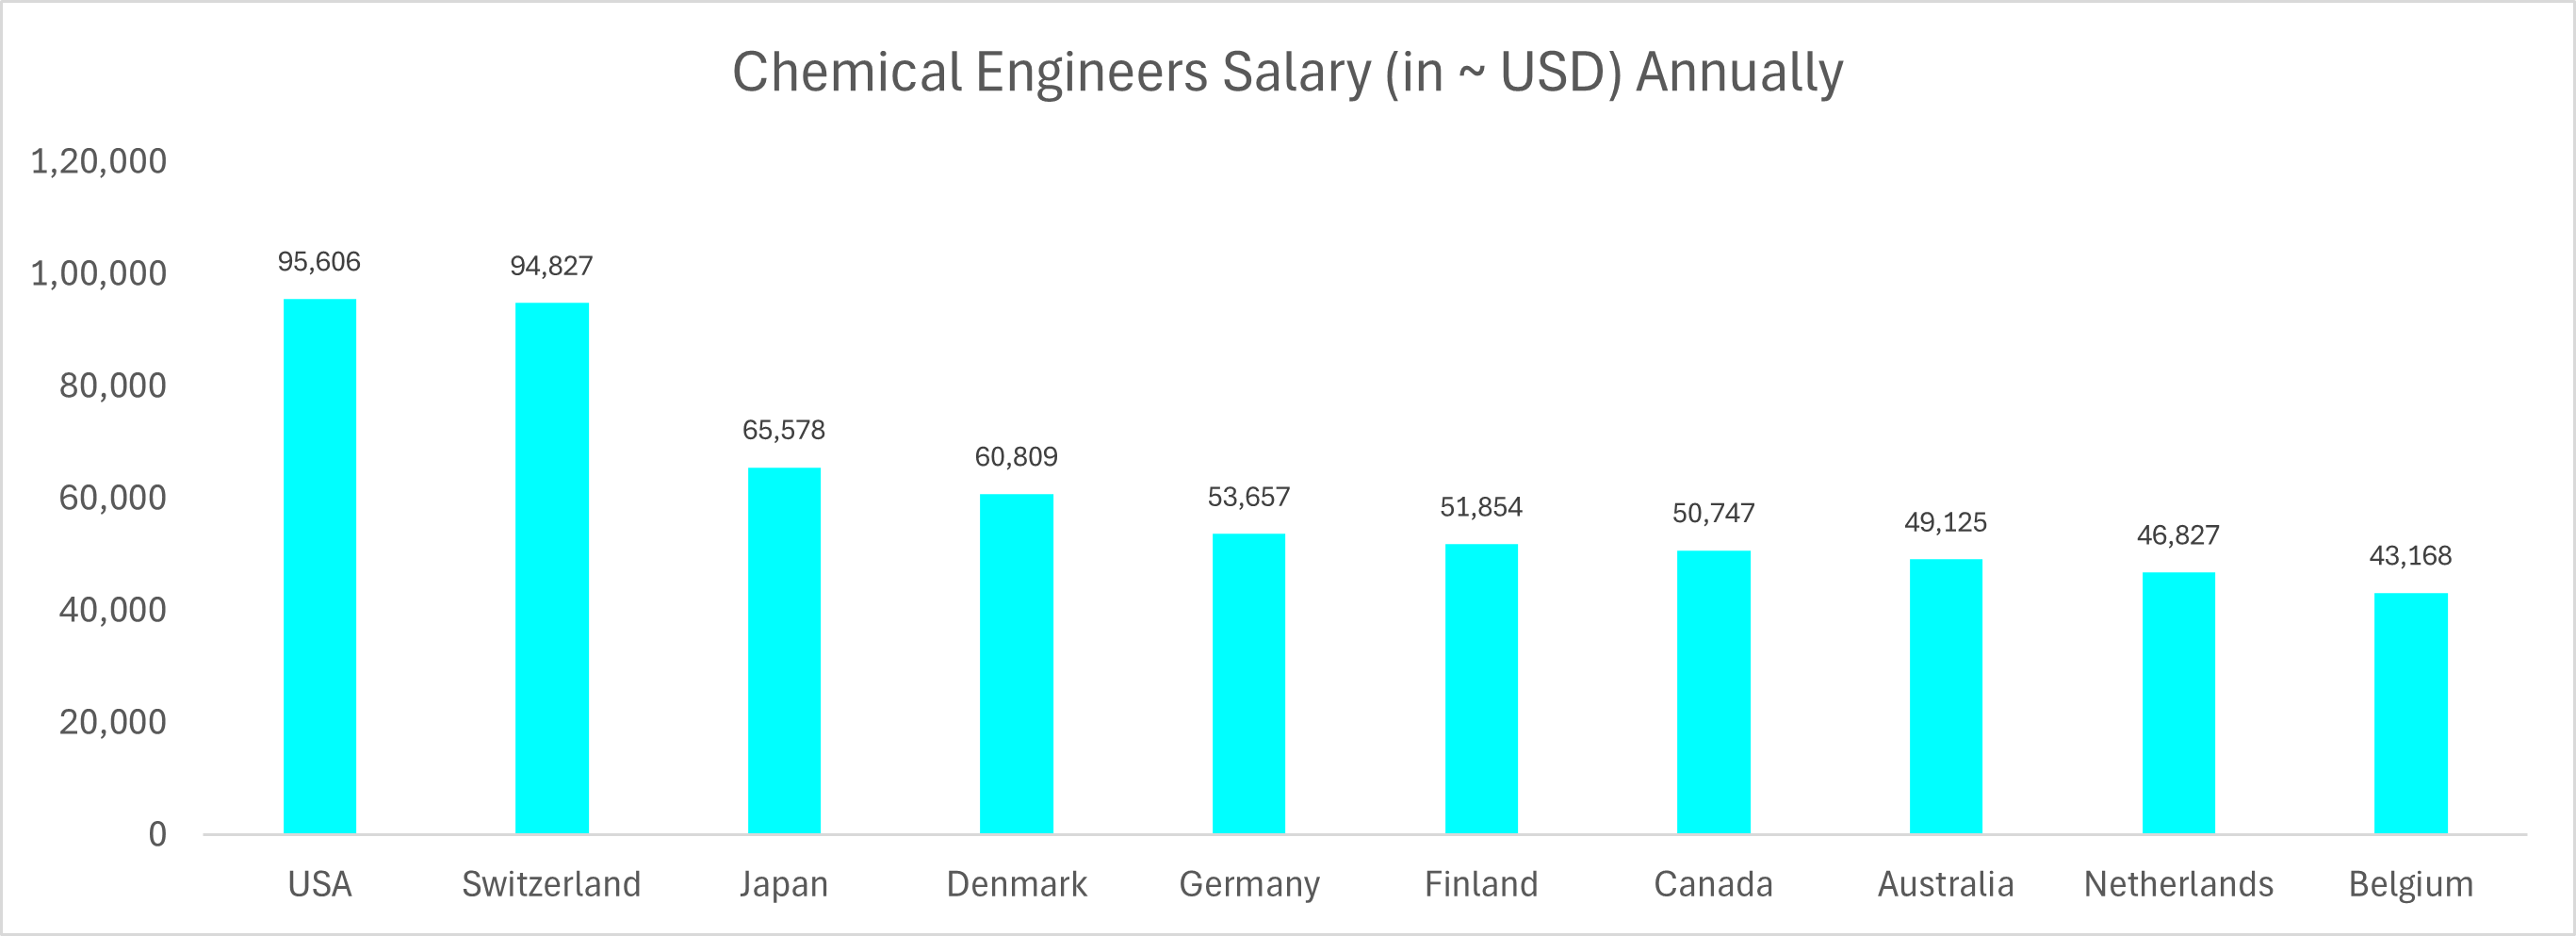 Chemical Engineers Salary